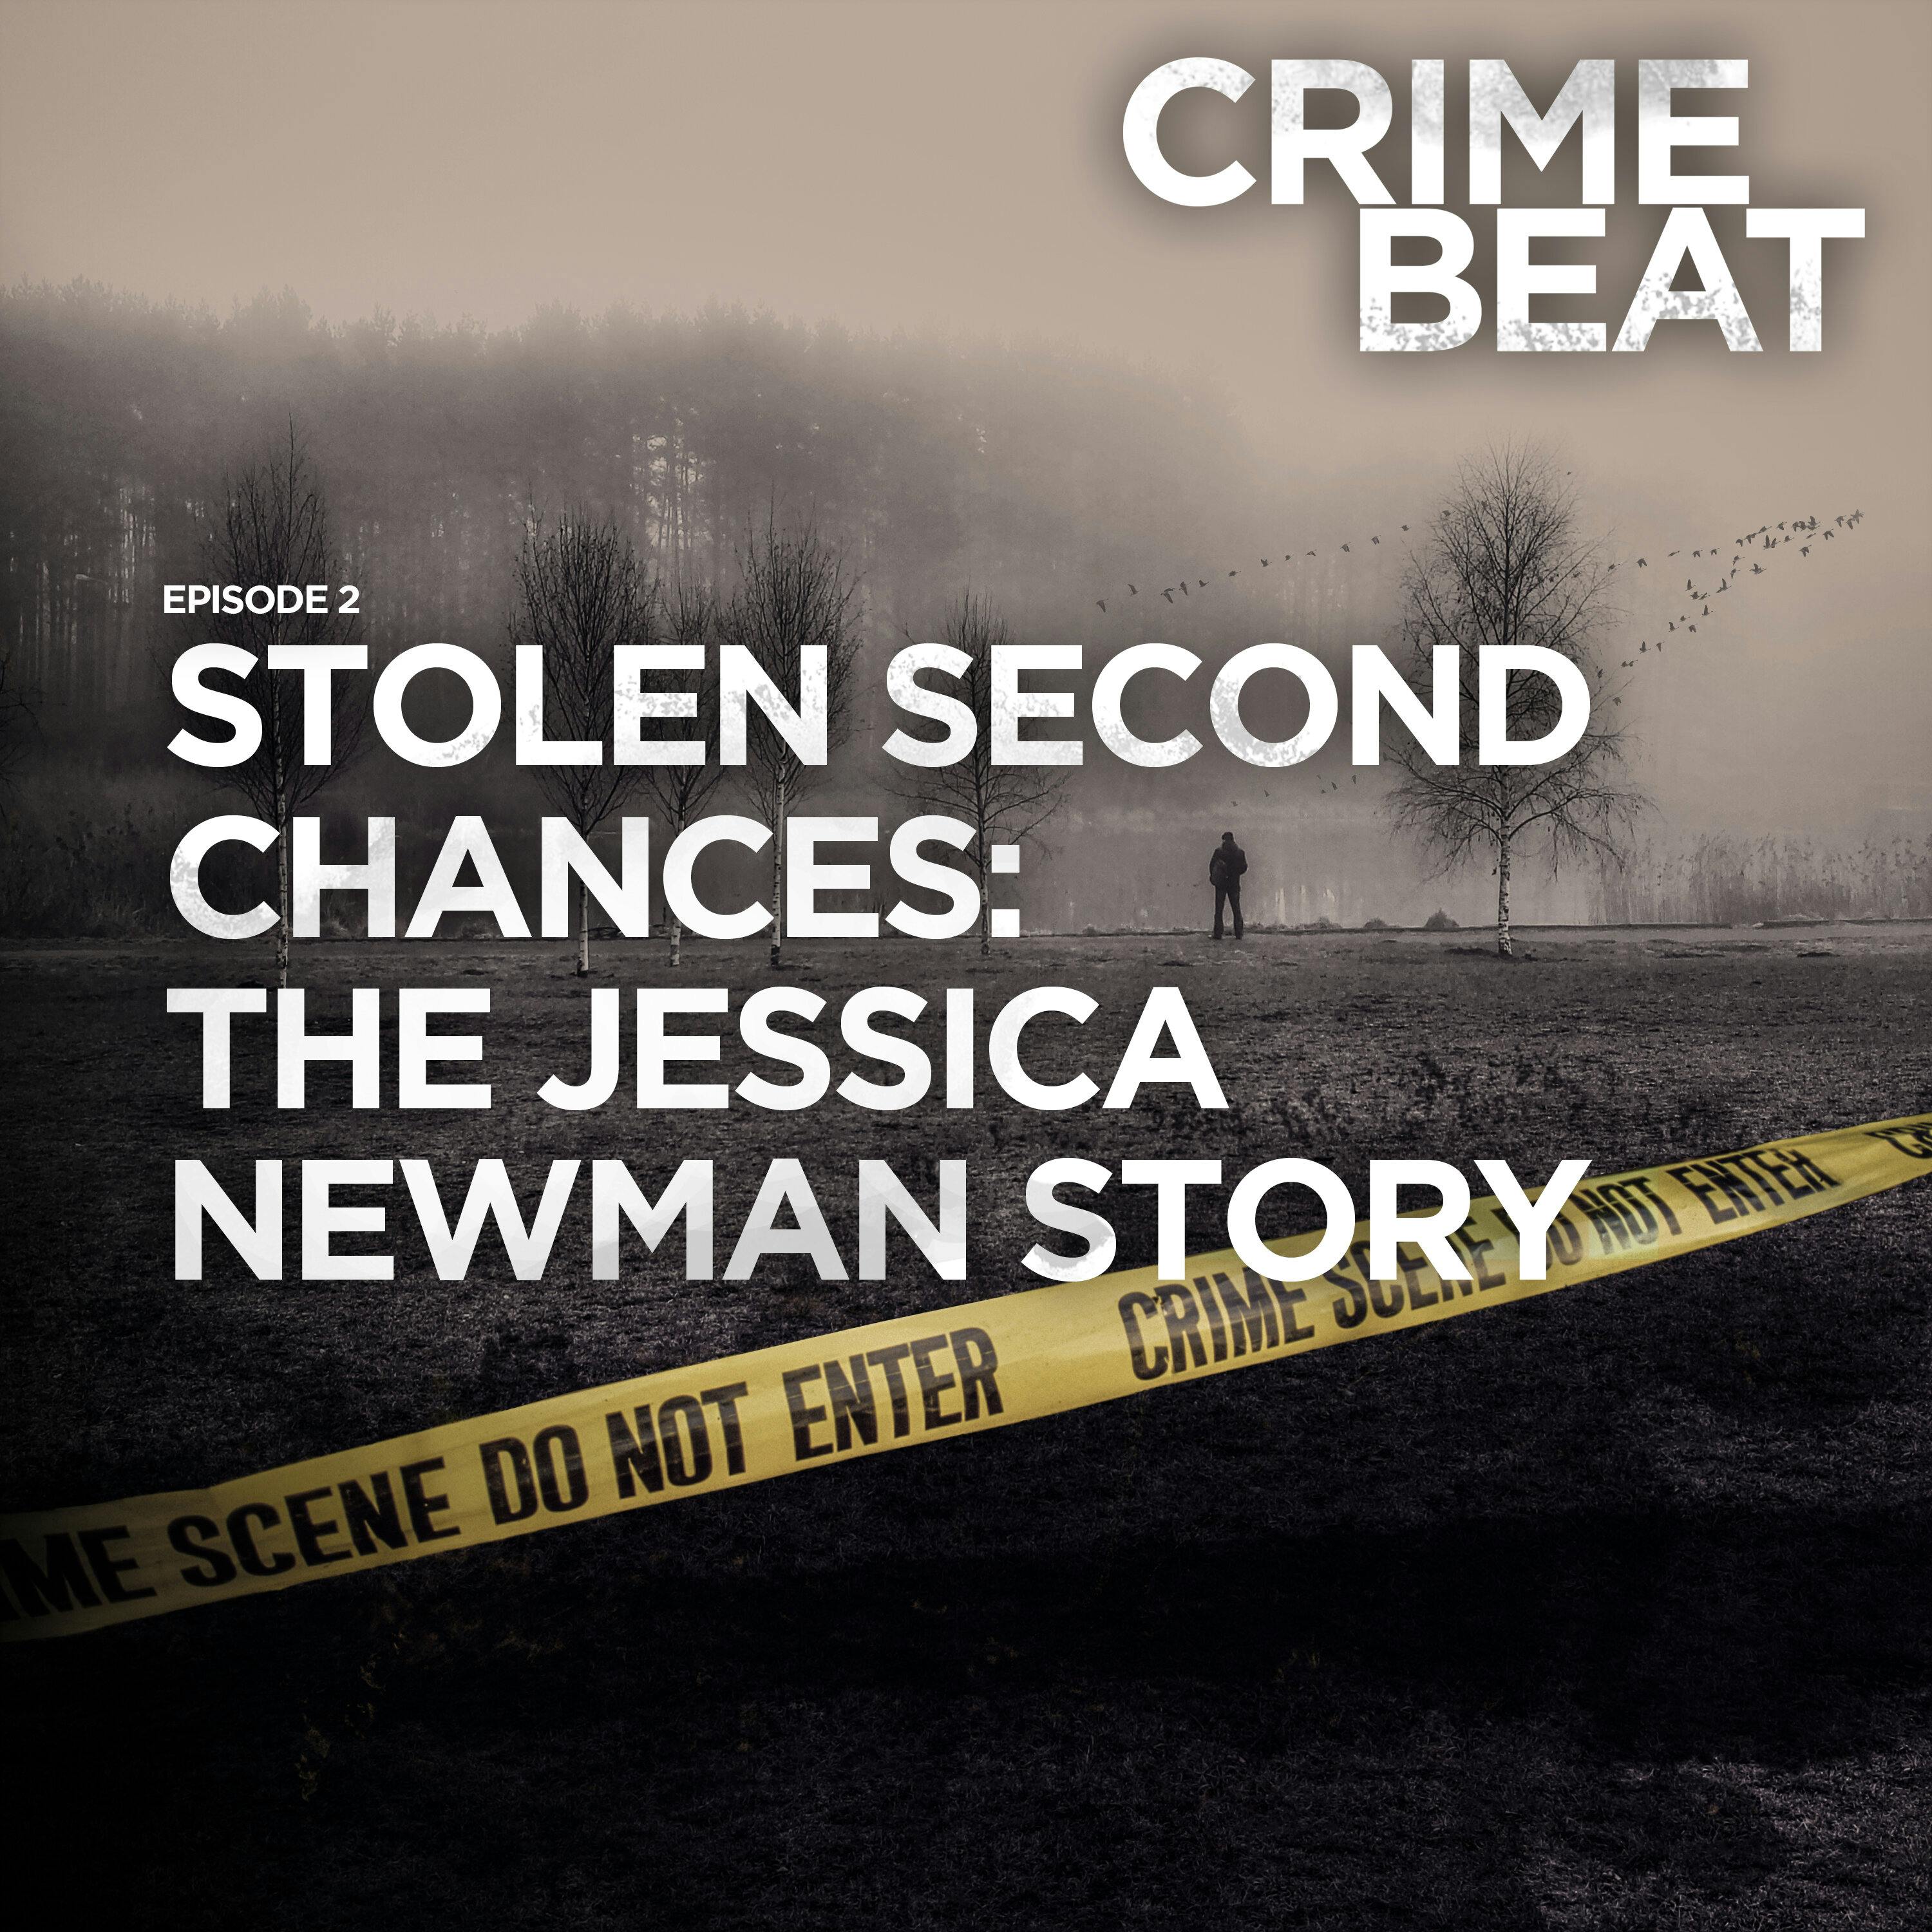 Stolen second chances: The Jessica Newman story |2